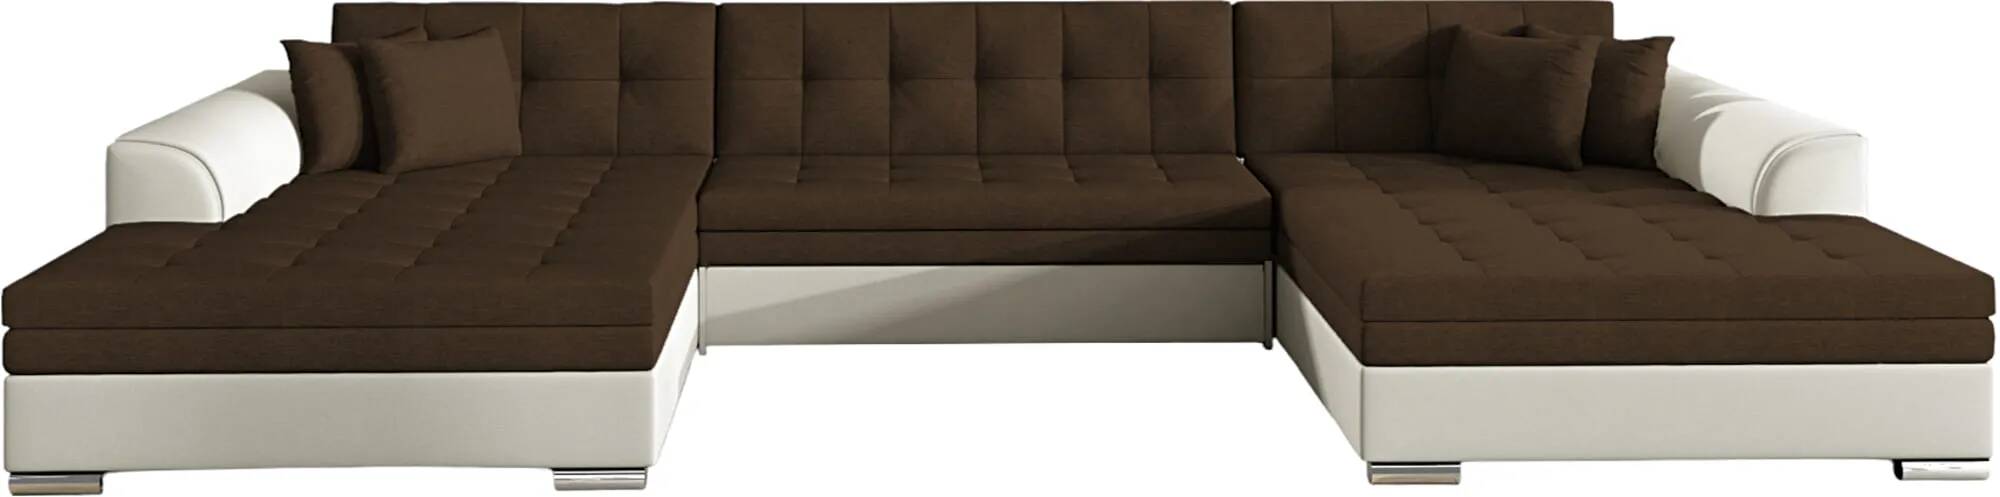 Canapé d'angle convertible en tissu marron et simili cuir blanc